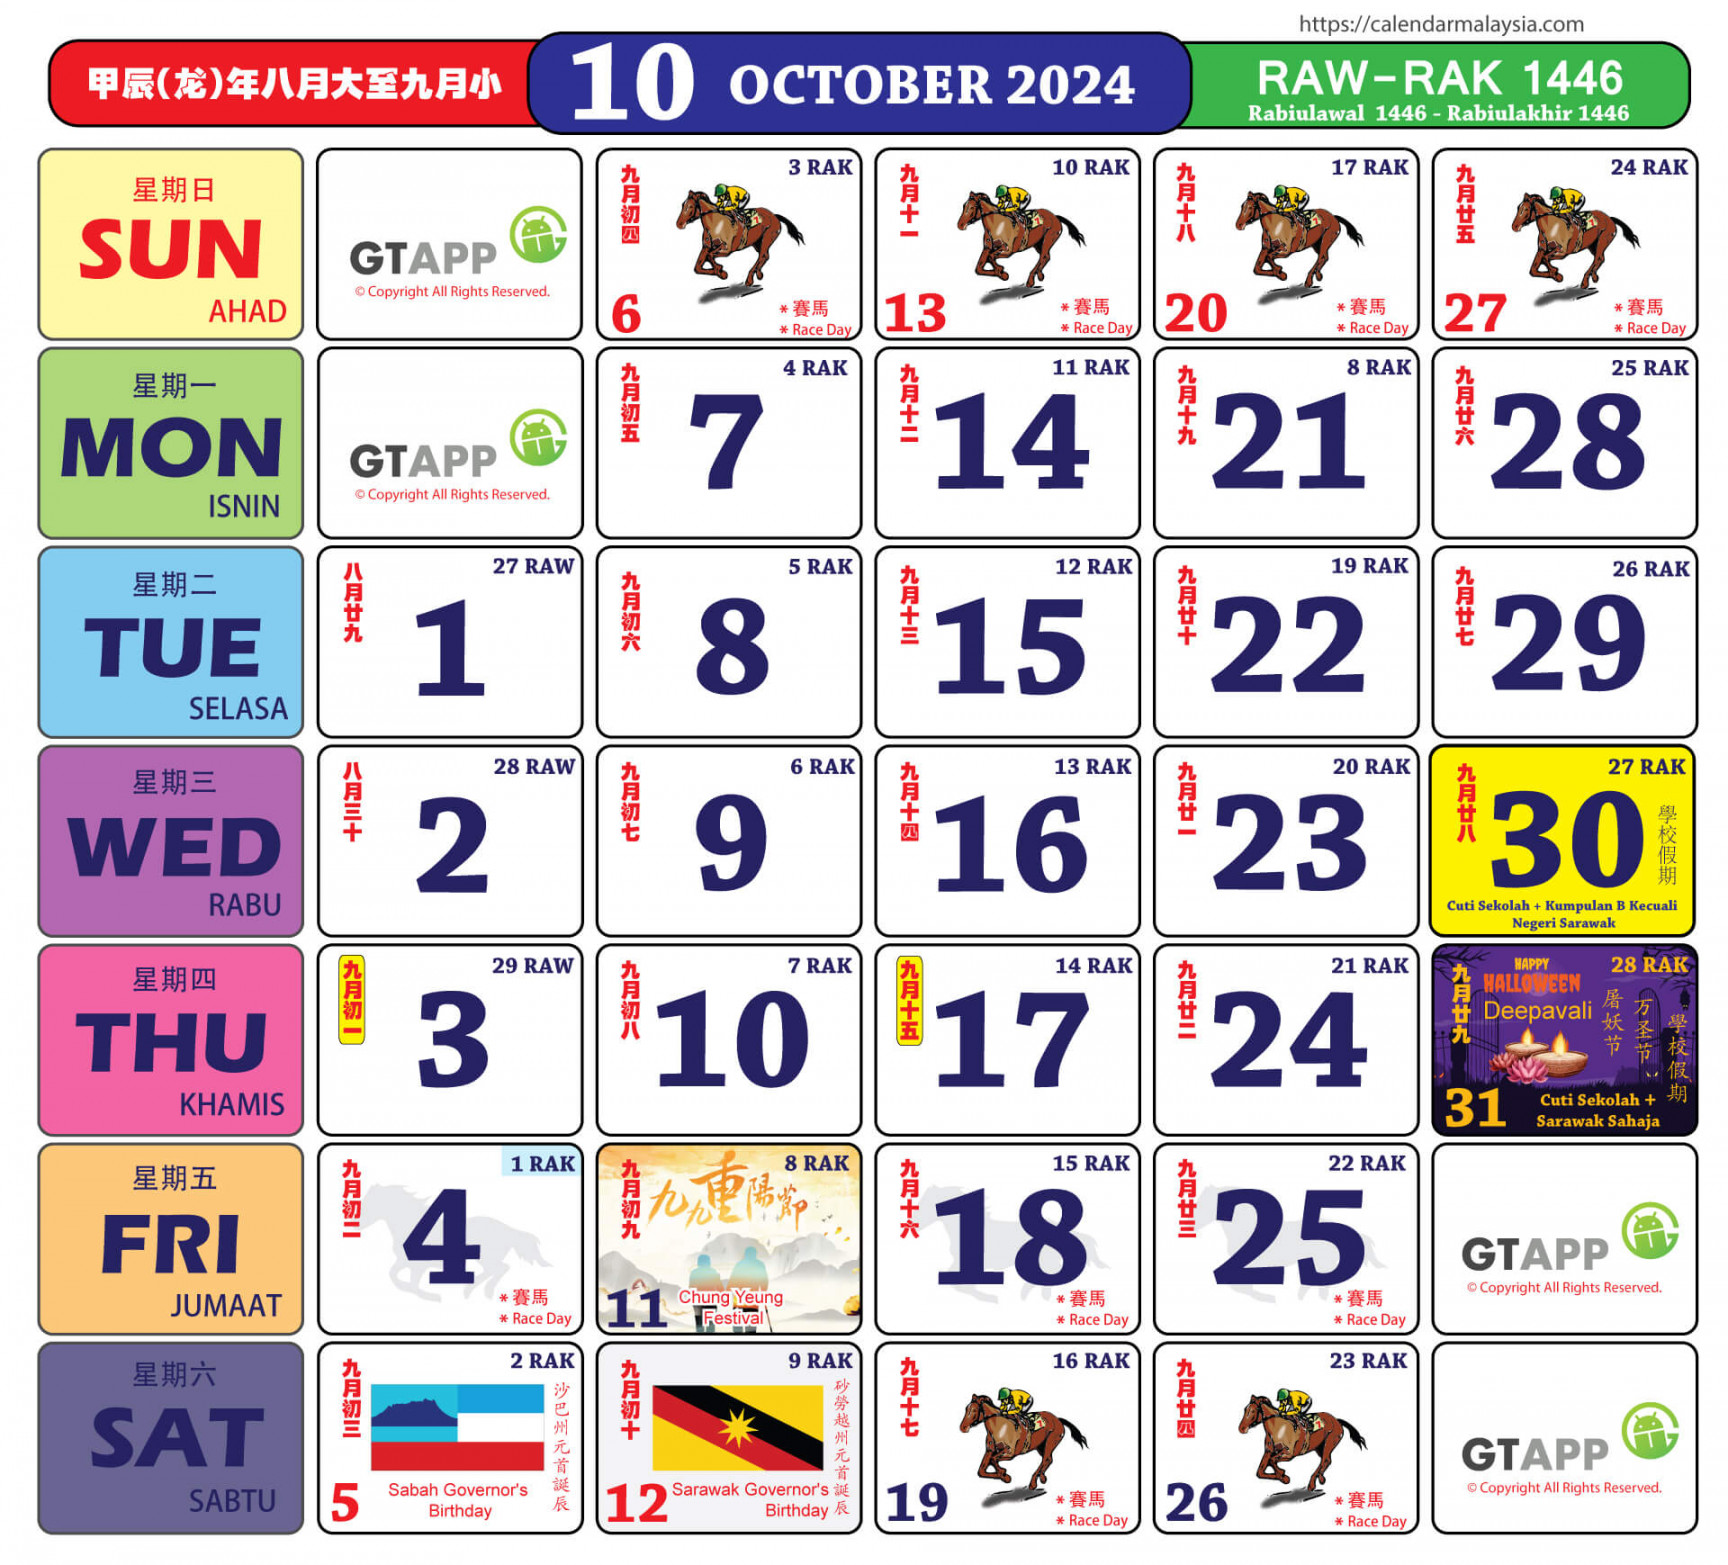 Calendar Malaysia  - Calendar Malaysia